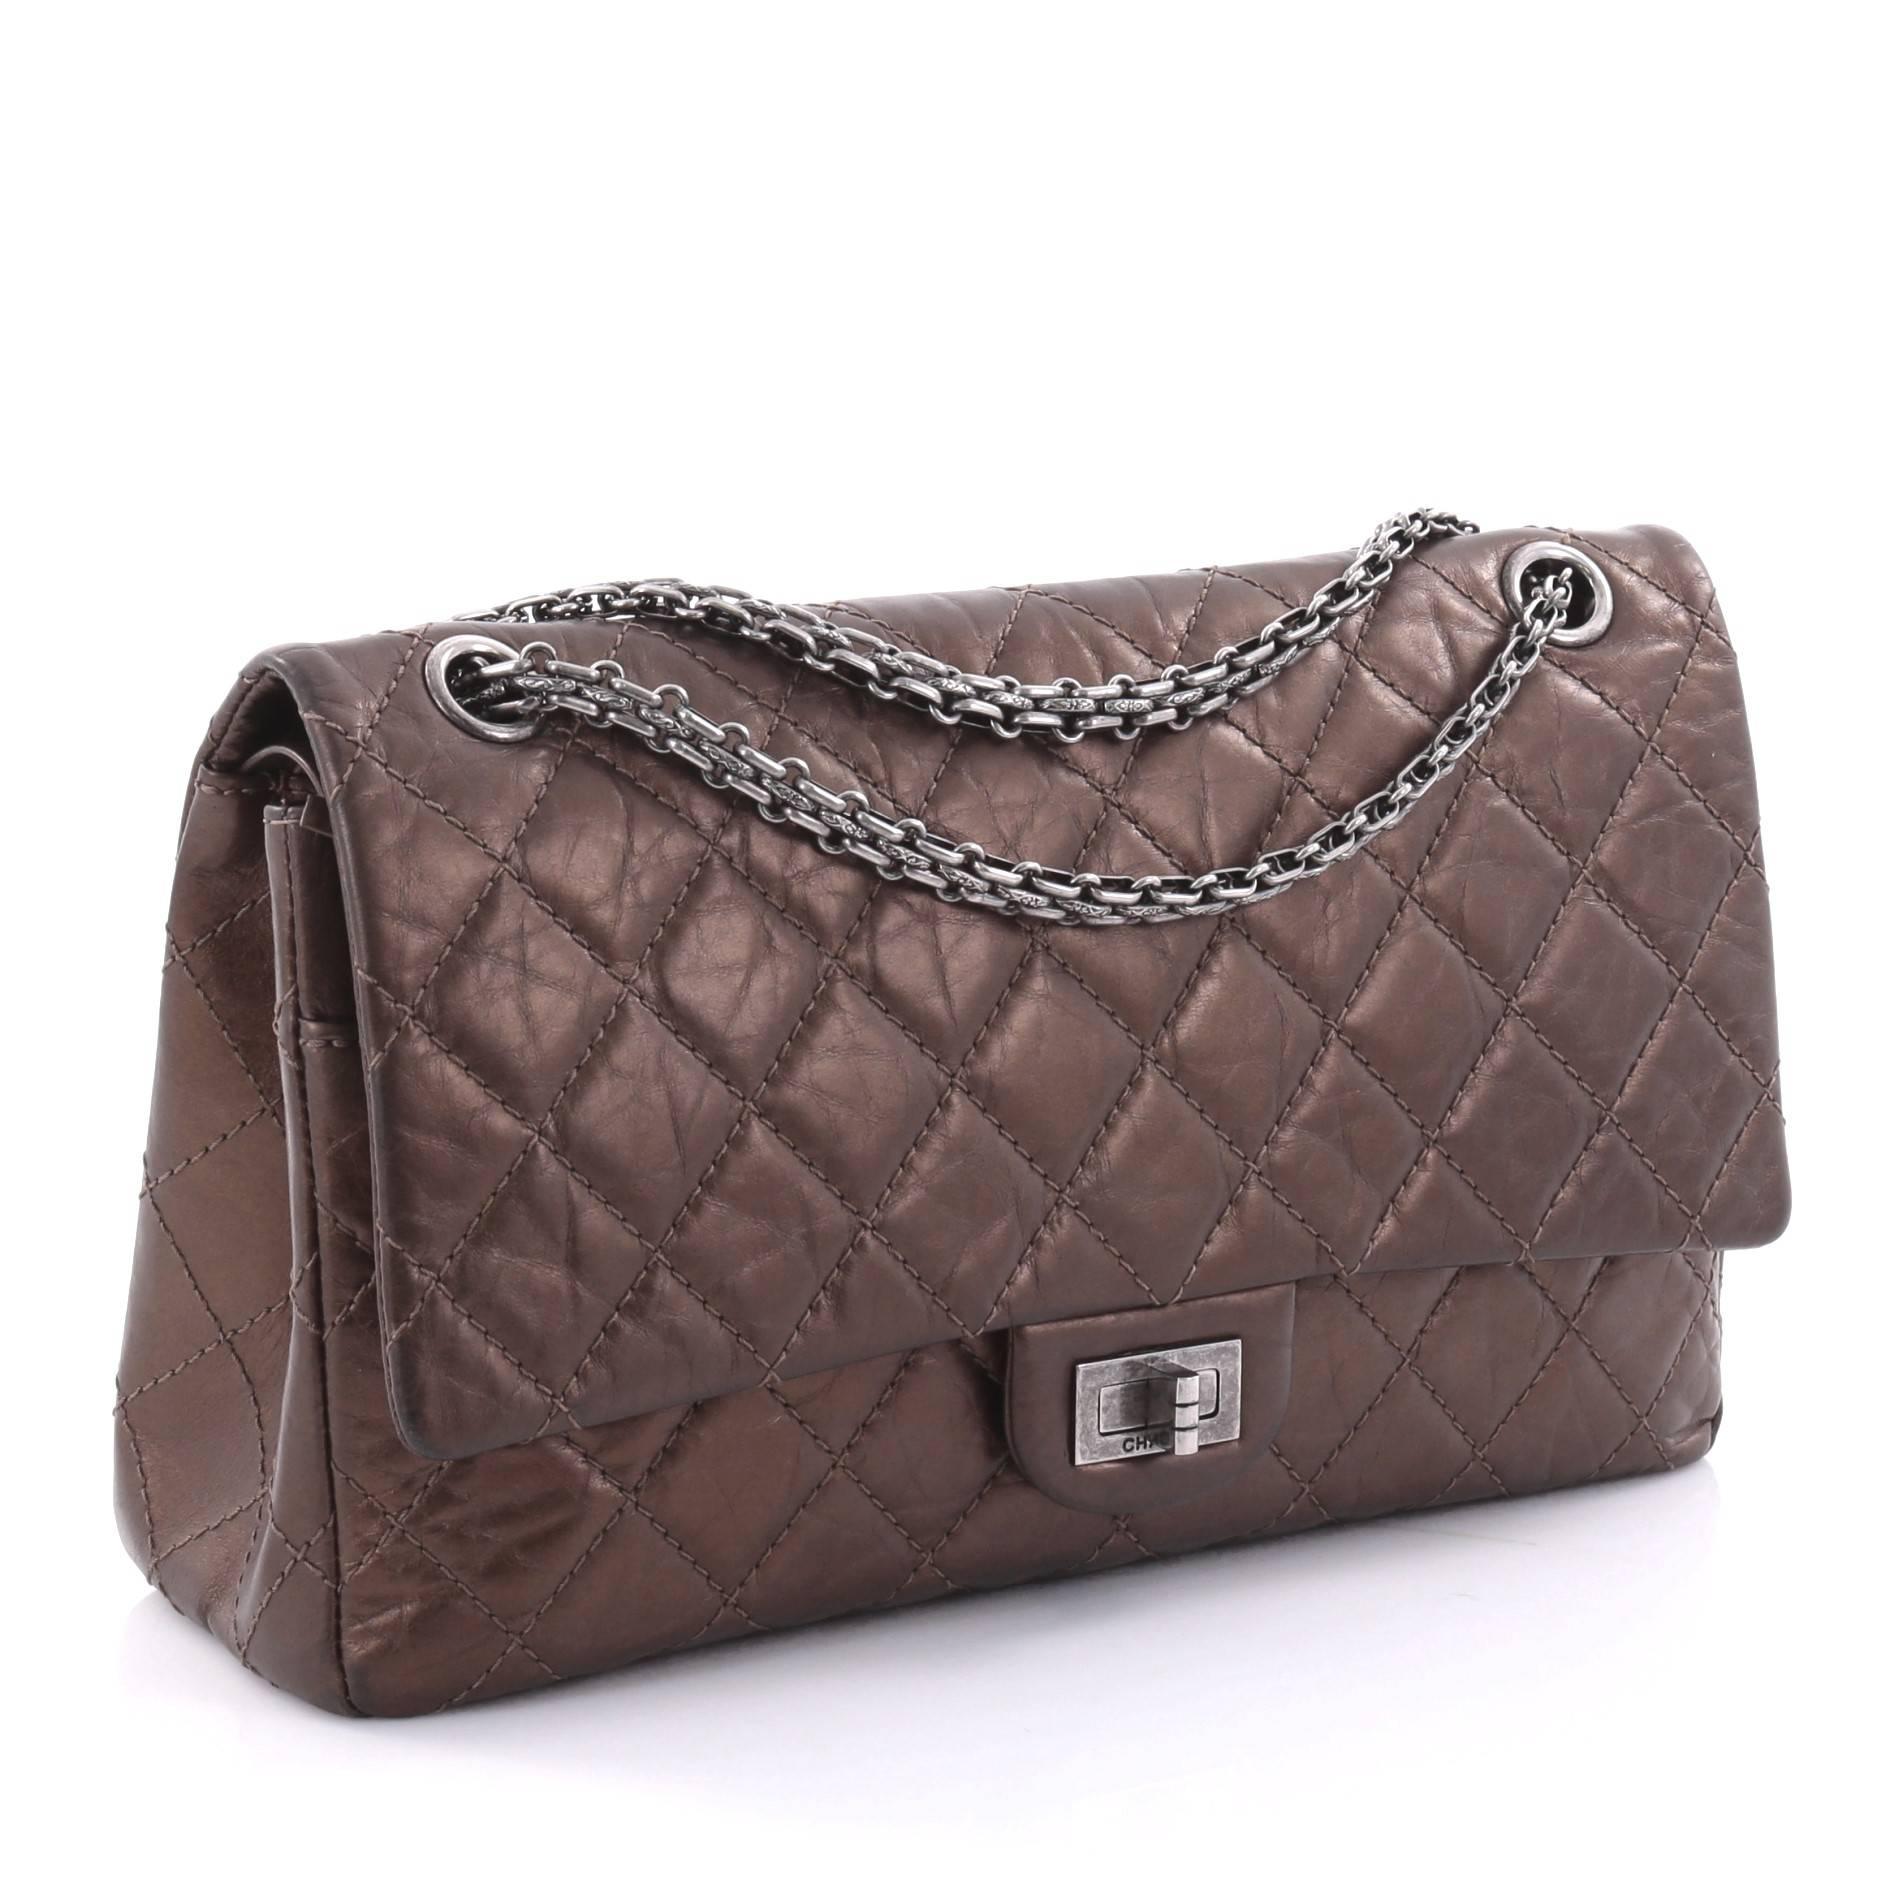 Black Chanel Reissue 2.55 Handbag Quilted Aged Calfskin 226